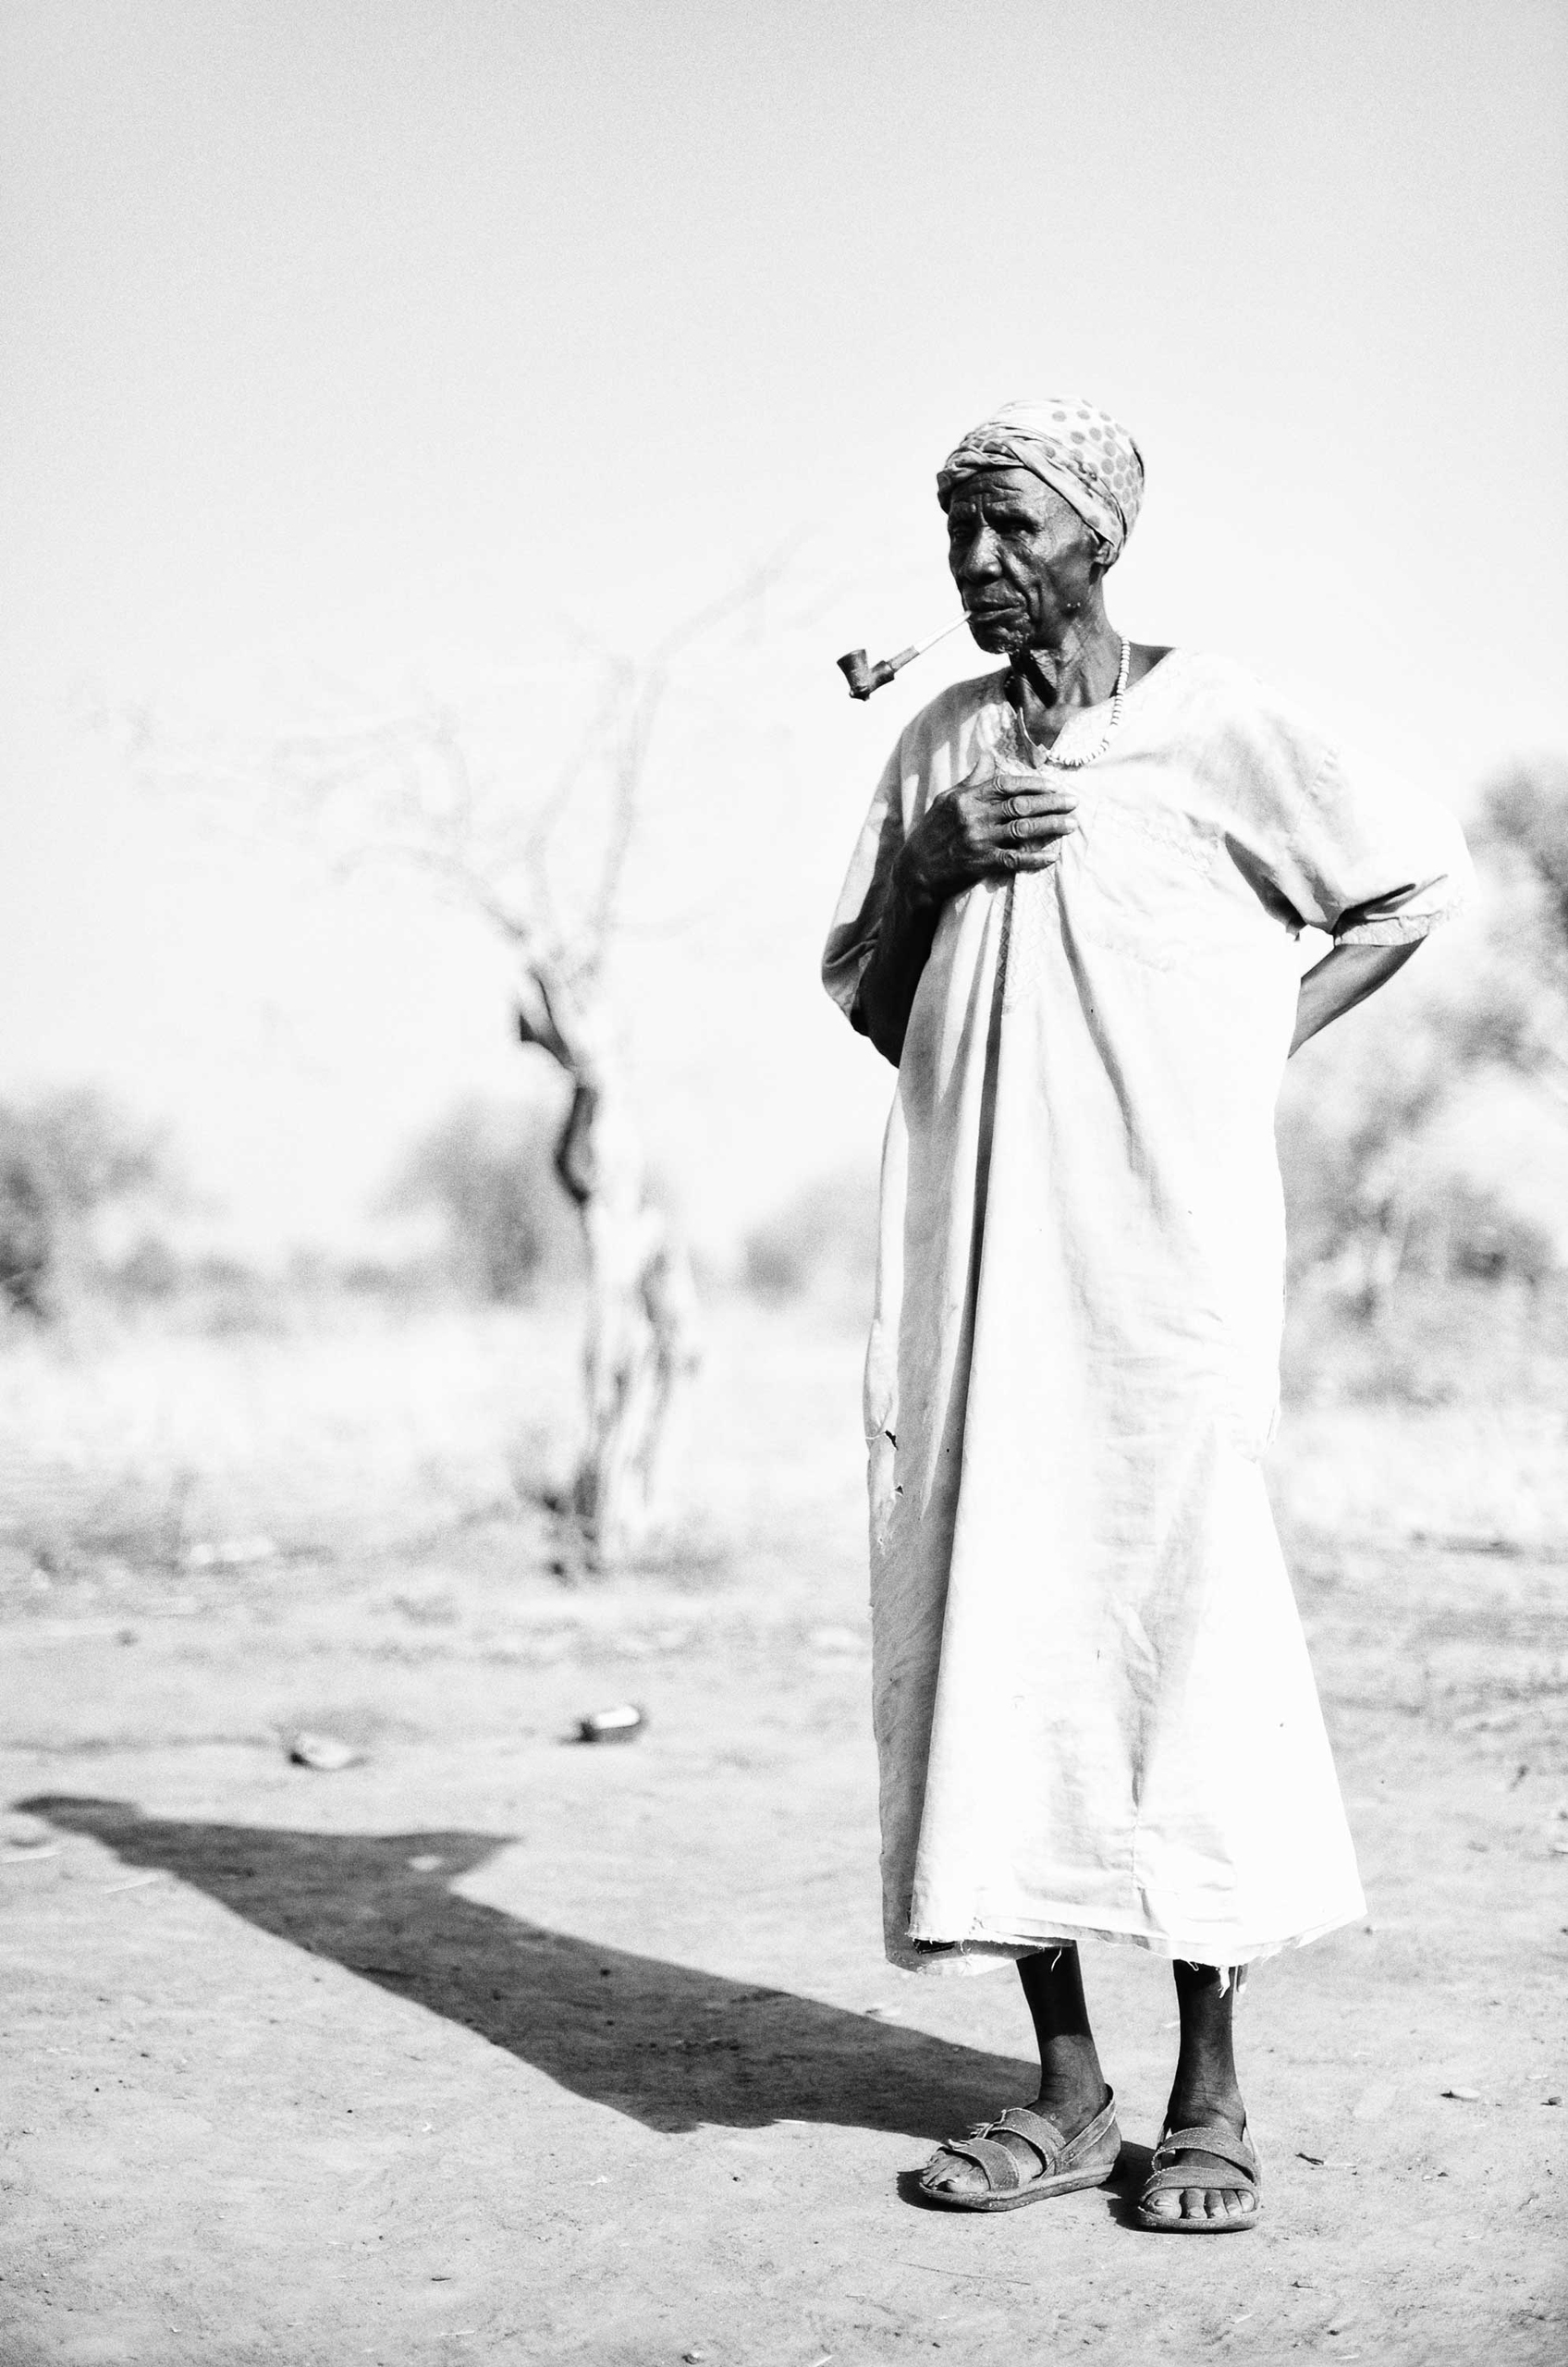 ugo-borga-south-soudan-portraits-2016-black-and-white-06